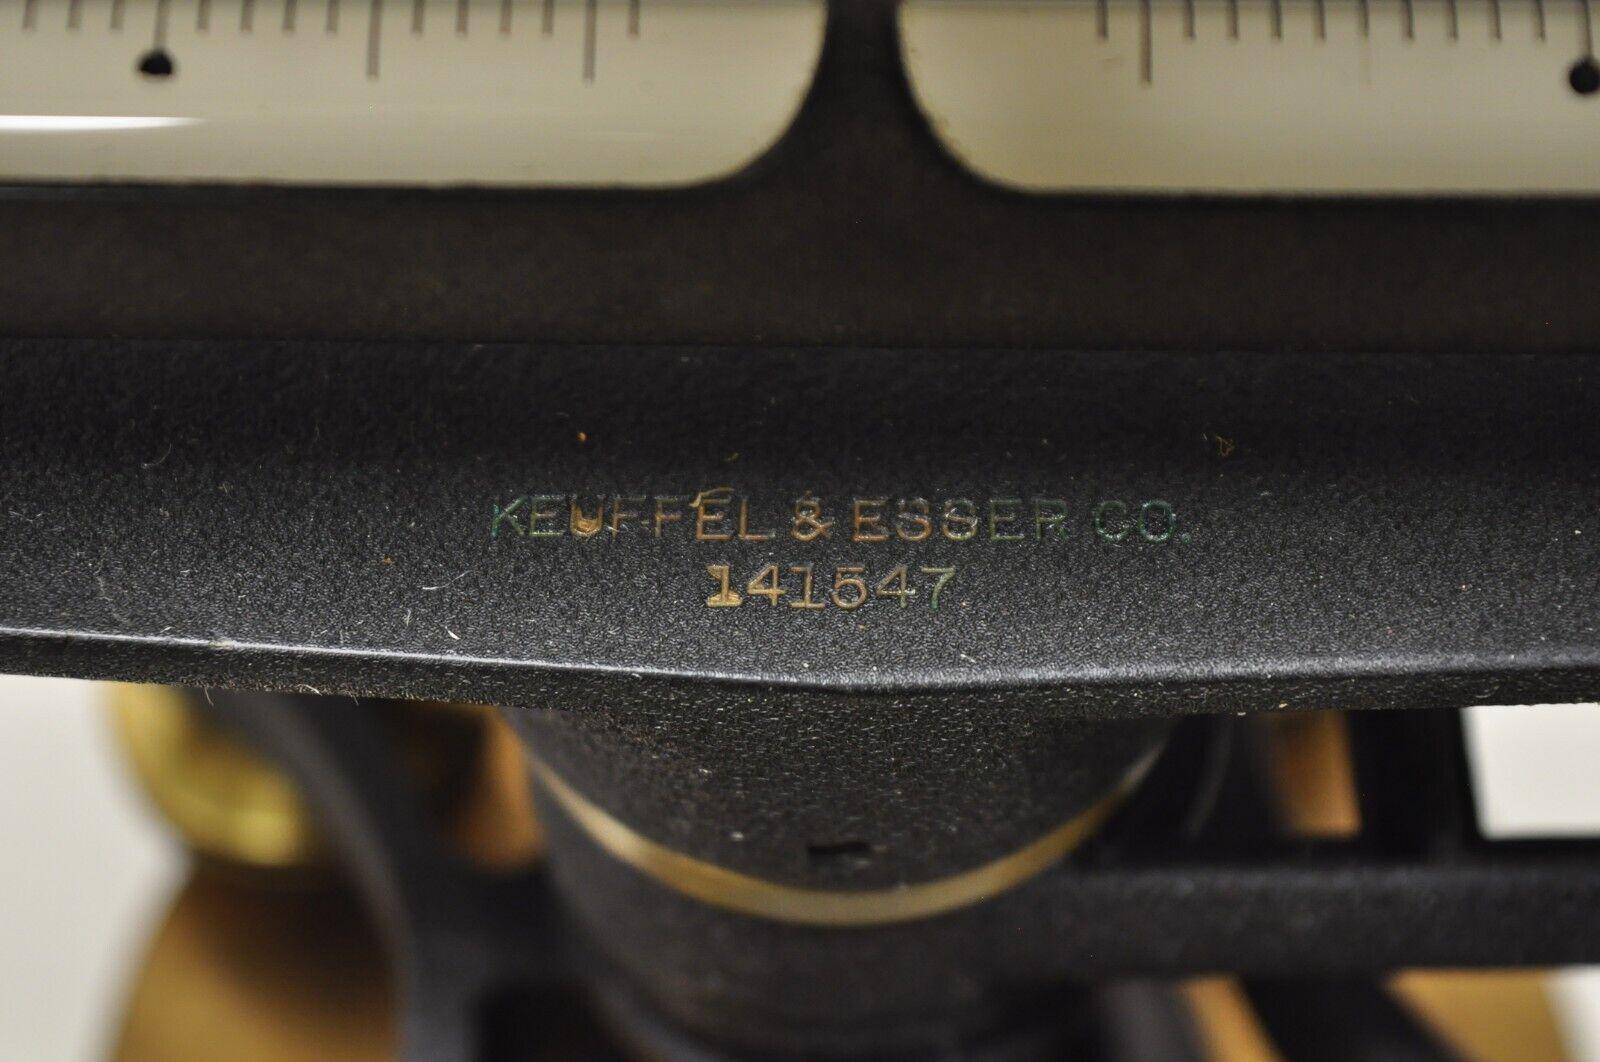 20th Century Antique Keuffel & Esser Co 141547 Surveyors Compass in Case w Wooden Tripod Base For Sale